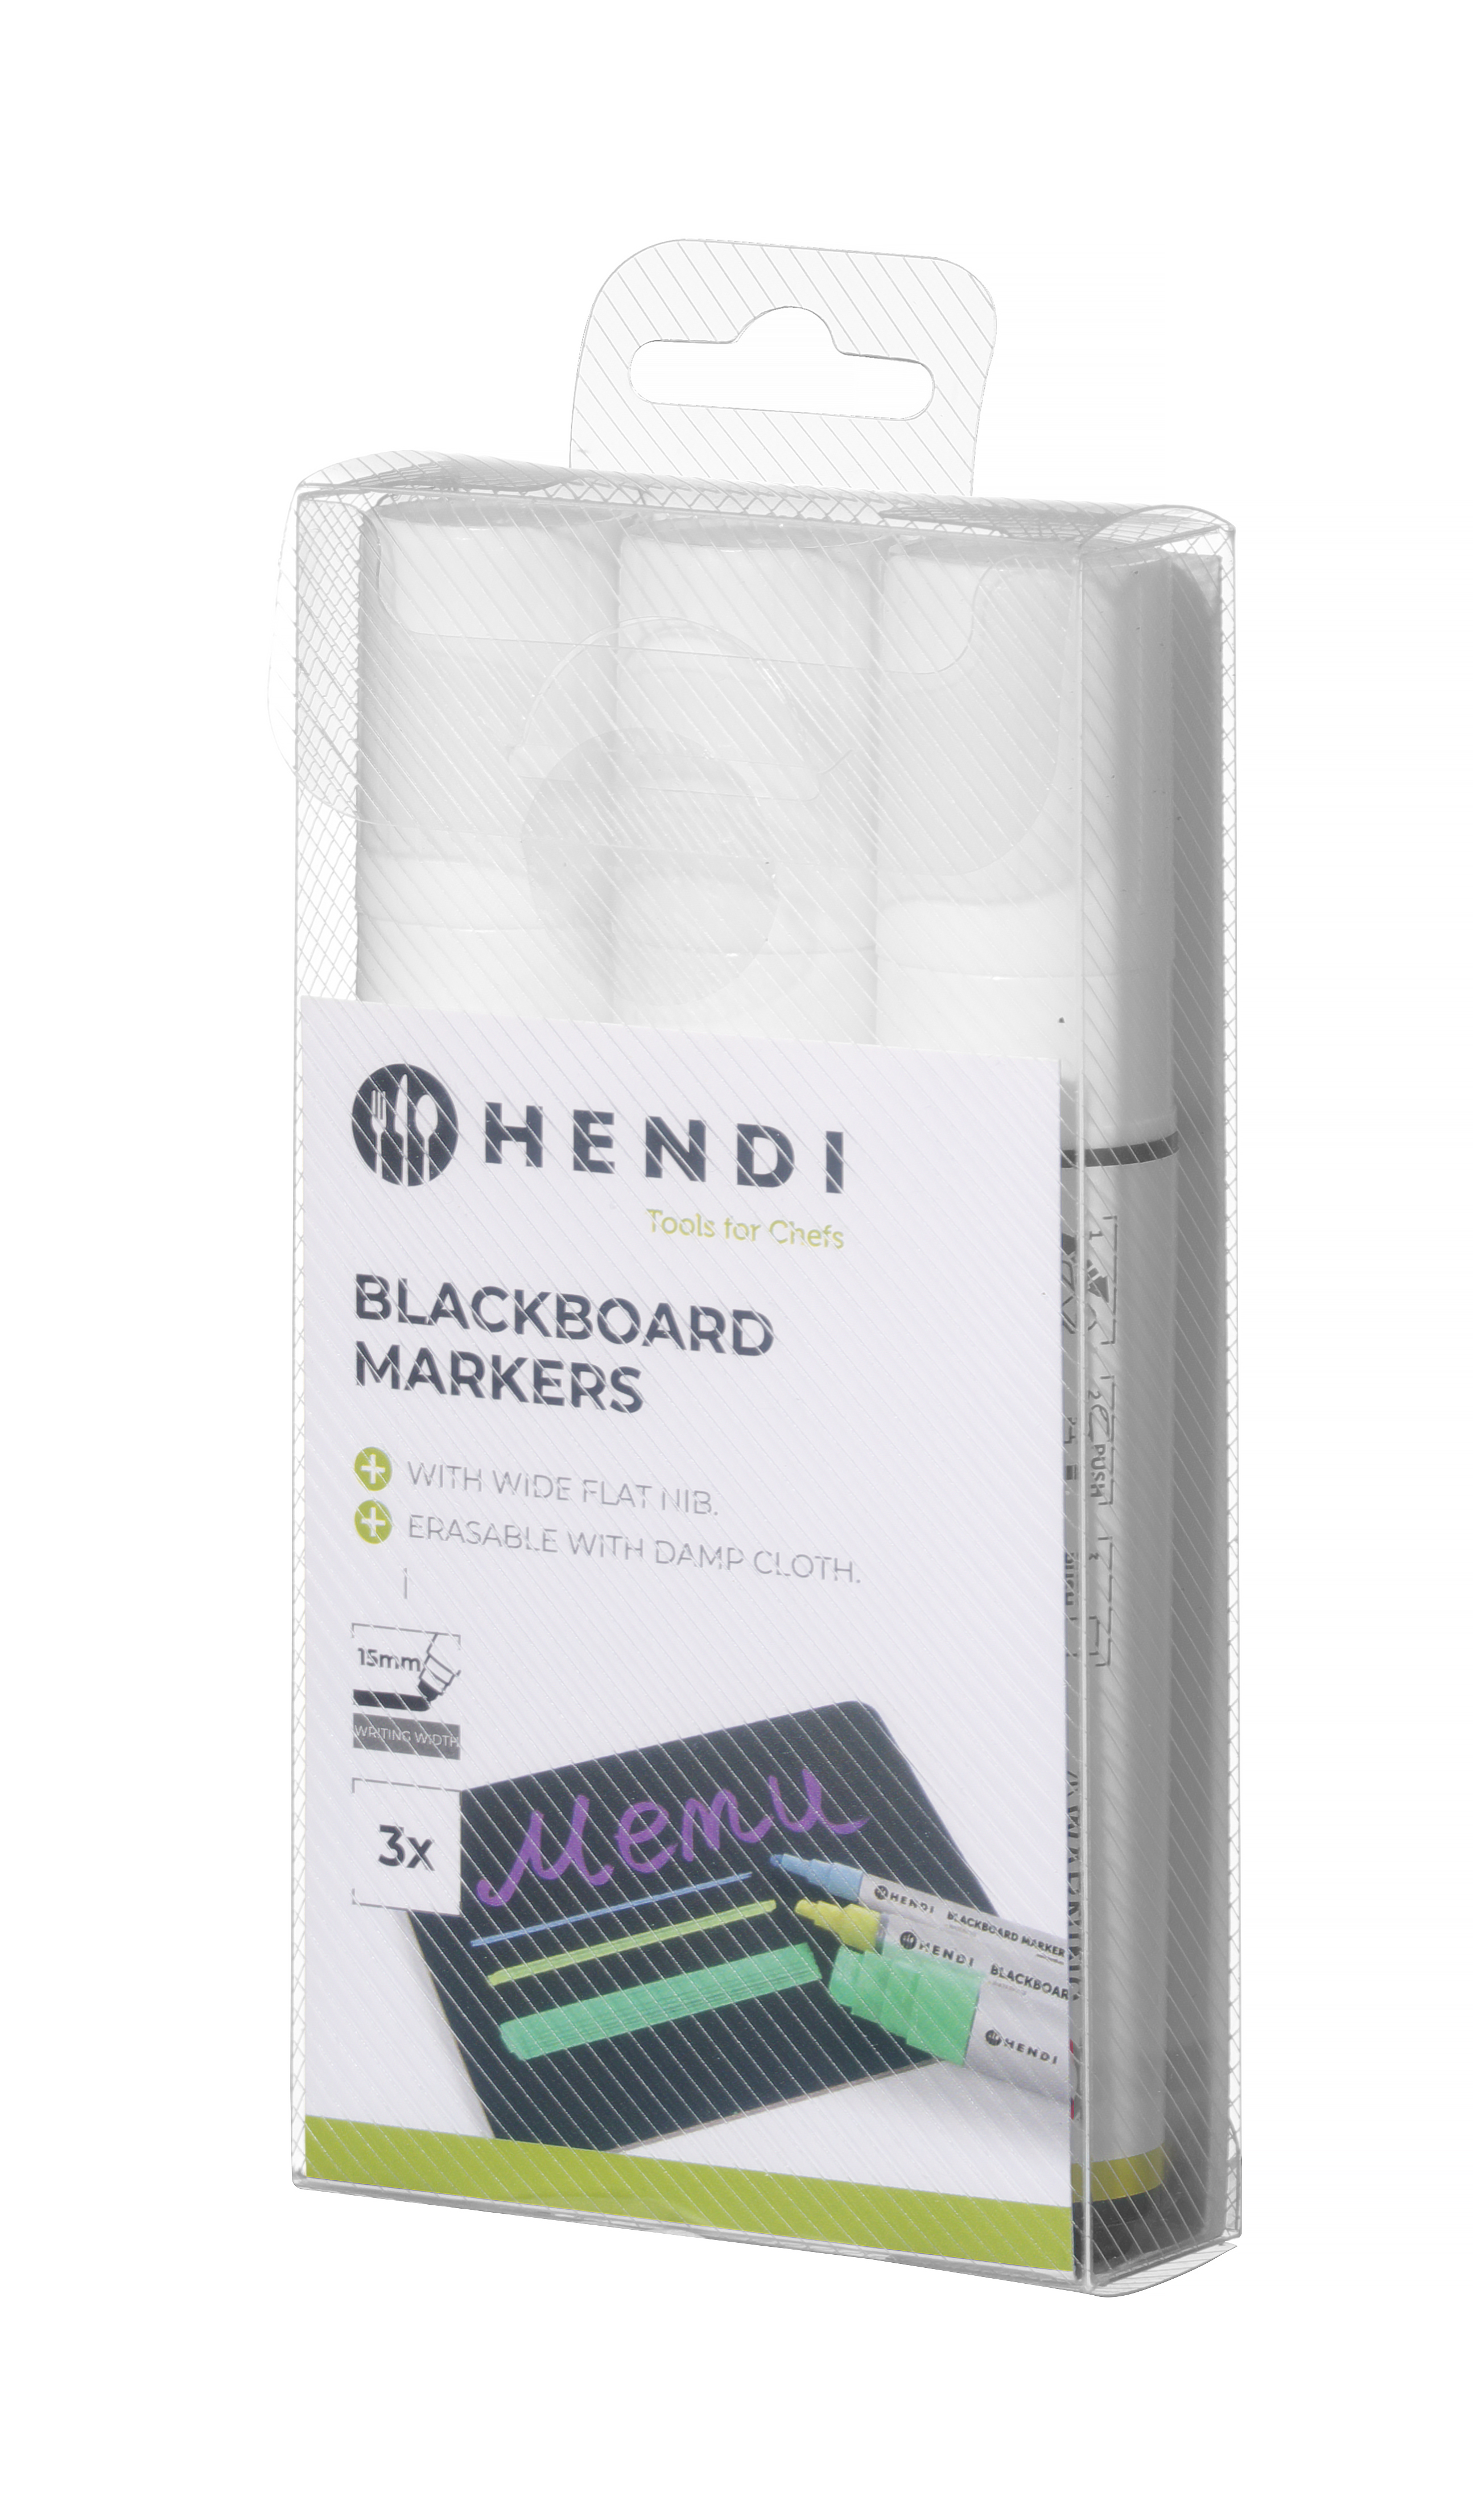 Blackboard markers 15 mm - HENDI Tools for Chefs